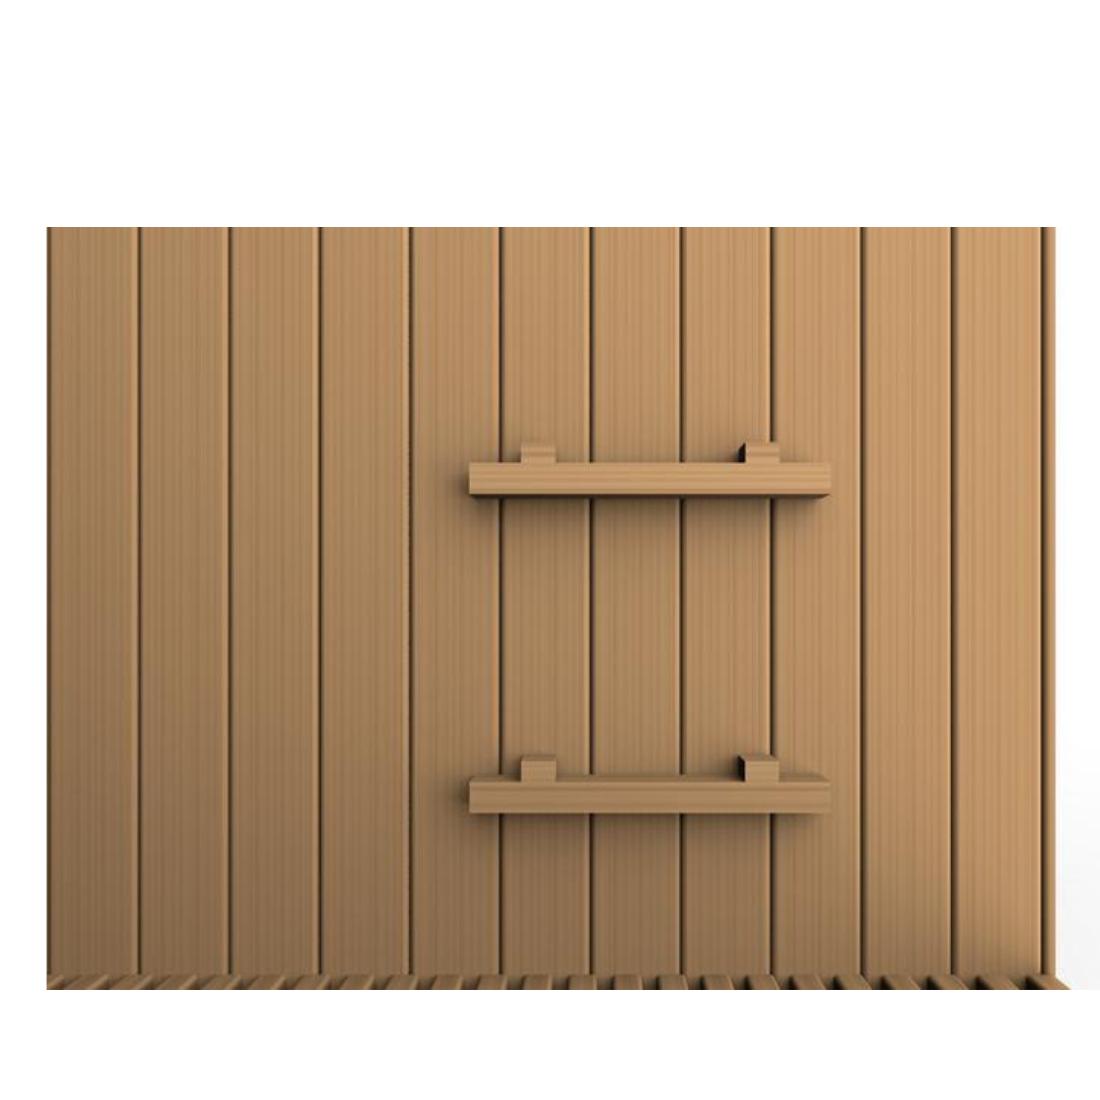 Golden Designs "Osla Edition" 6 Person Traditional Steam Sauna - Canadian Red Cedar, GDI-7689-01 dual vertical shelving.